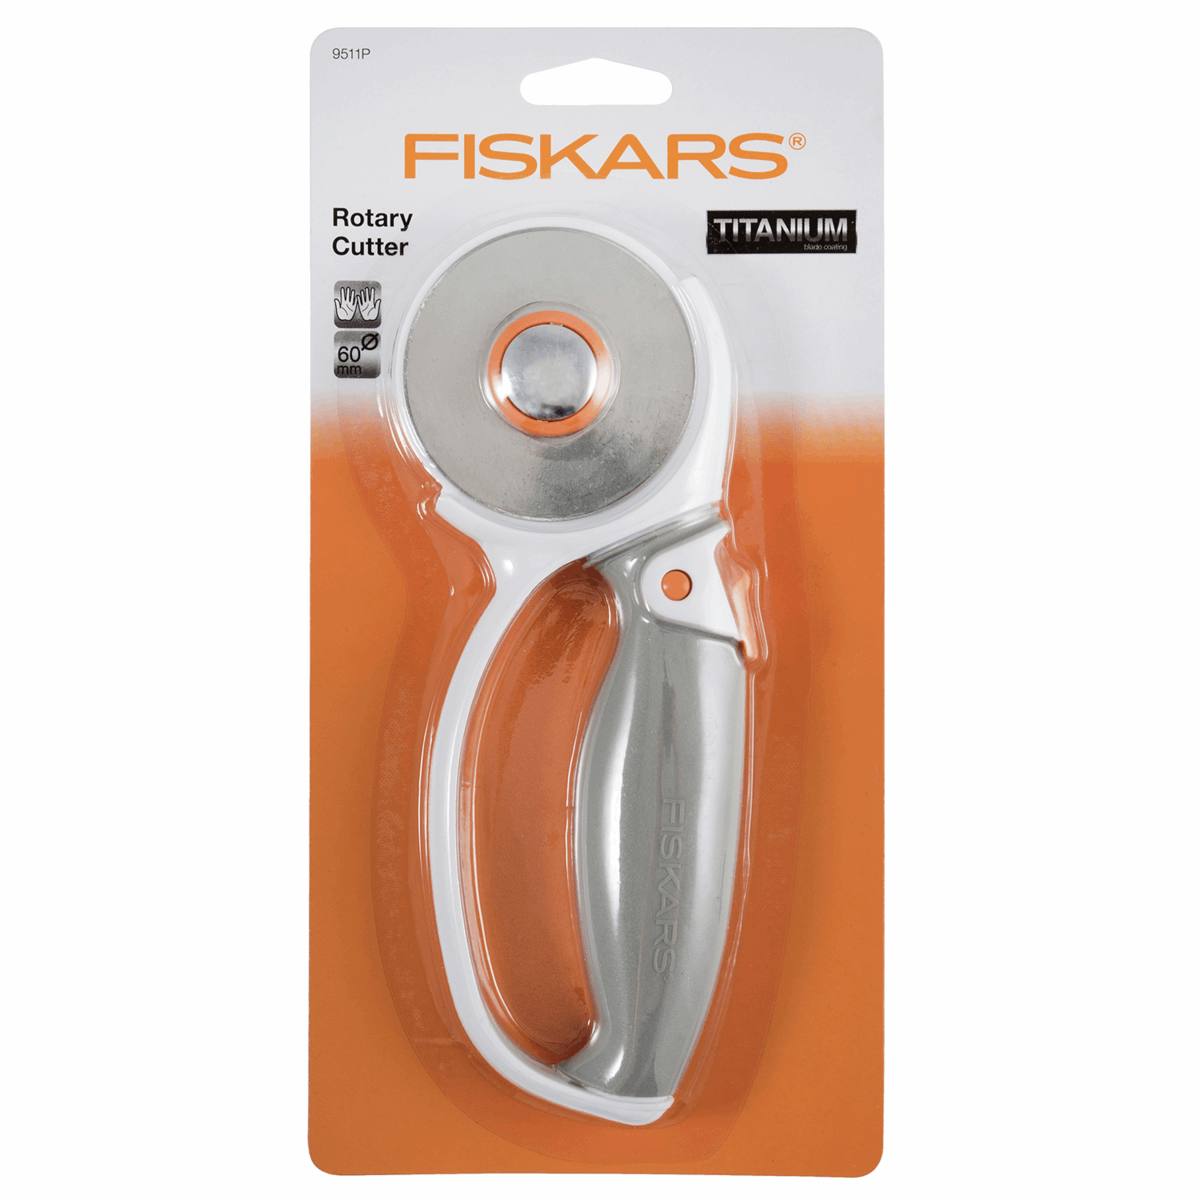 Fiskars Rotary Cutter 45mm Loop - Titanium